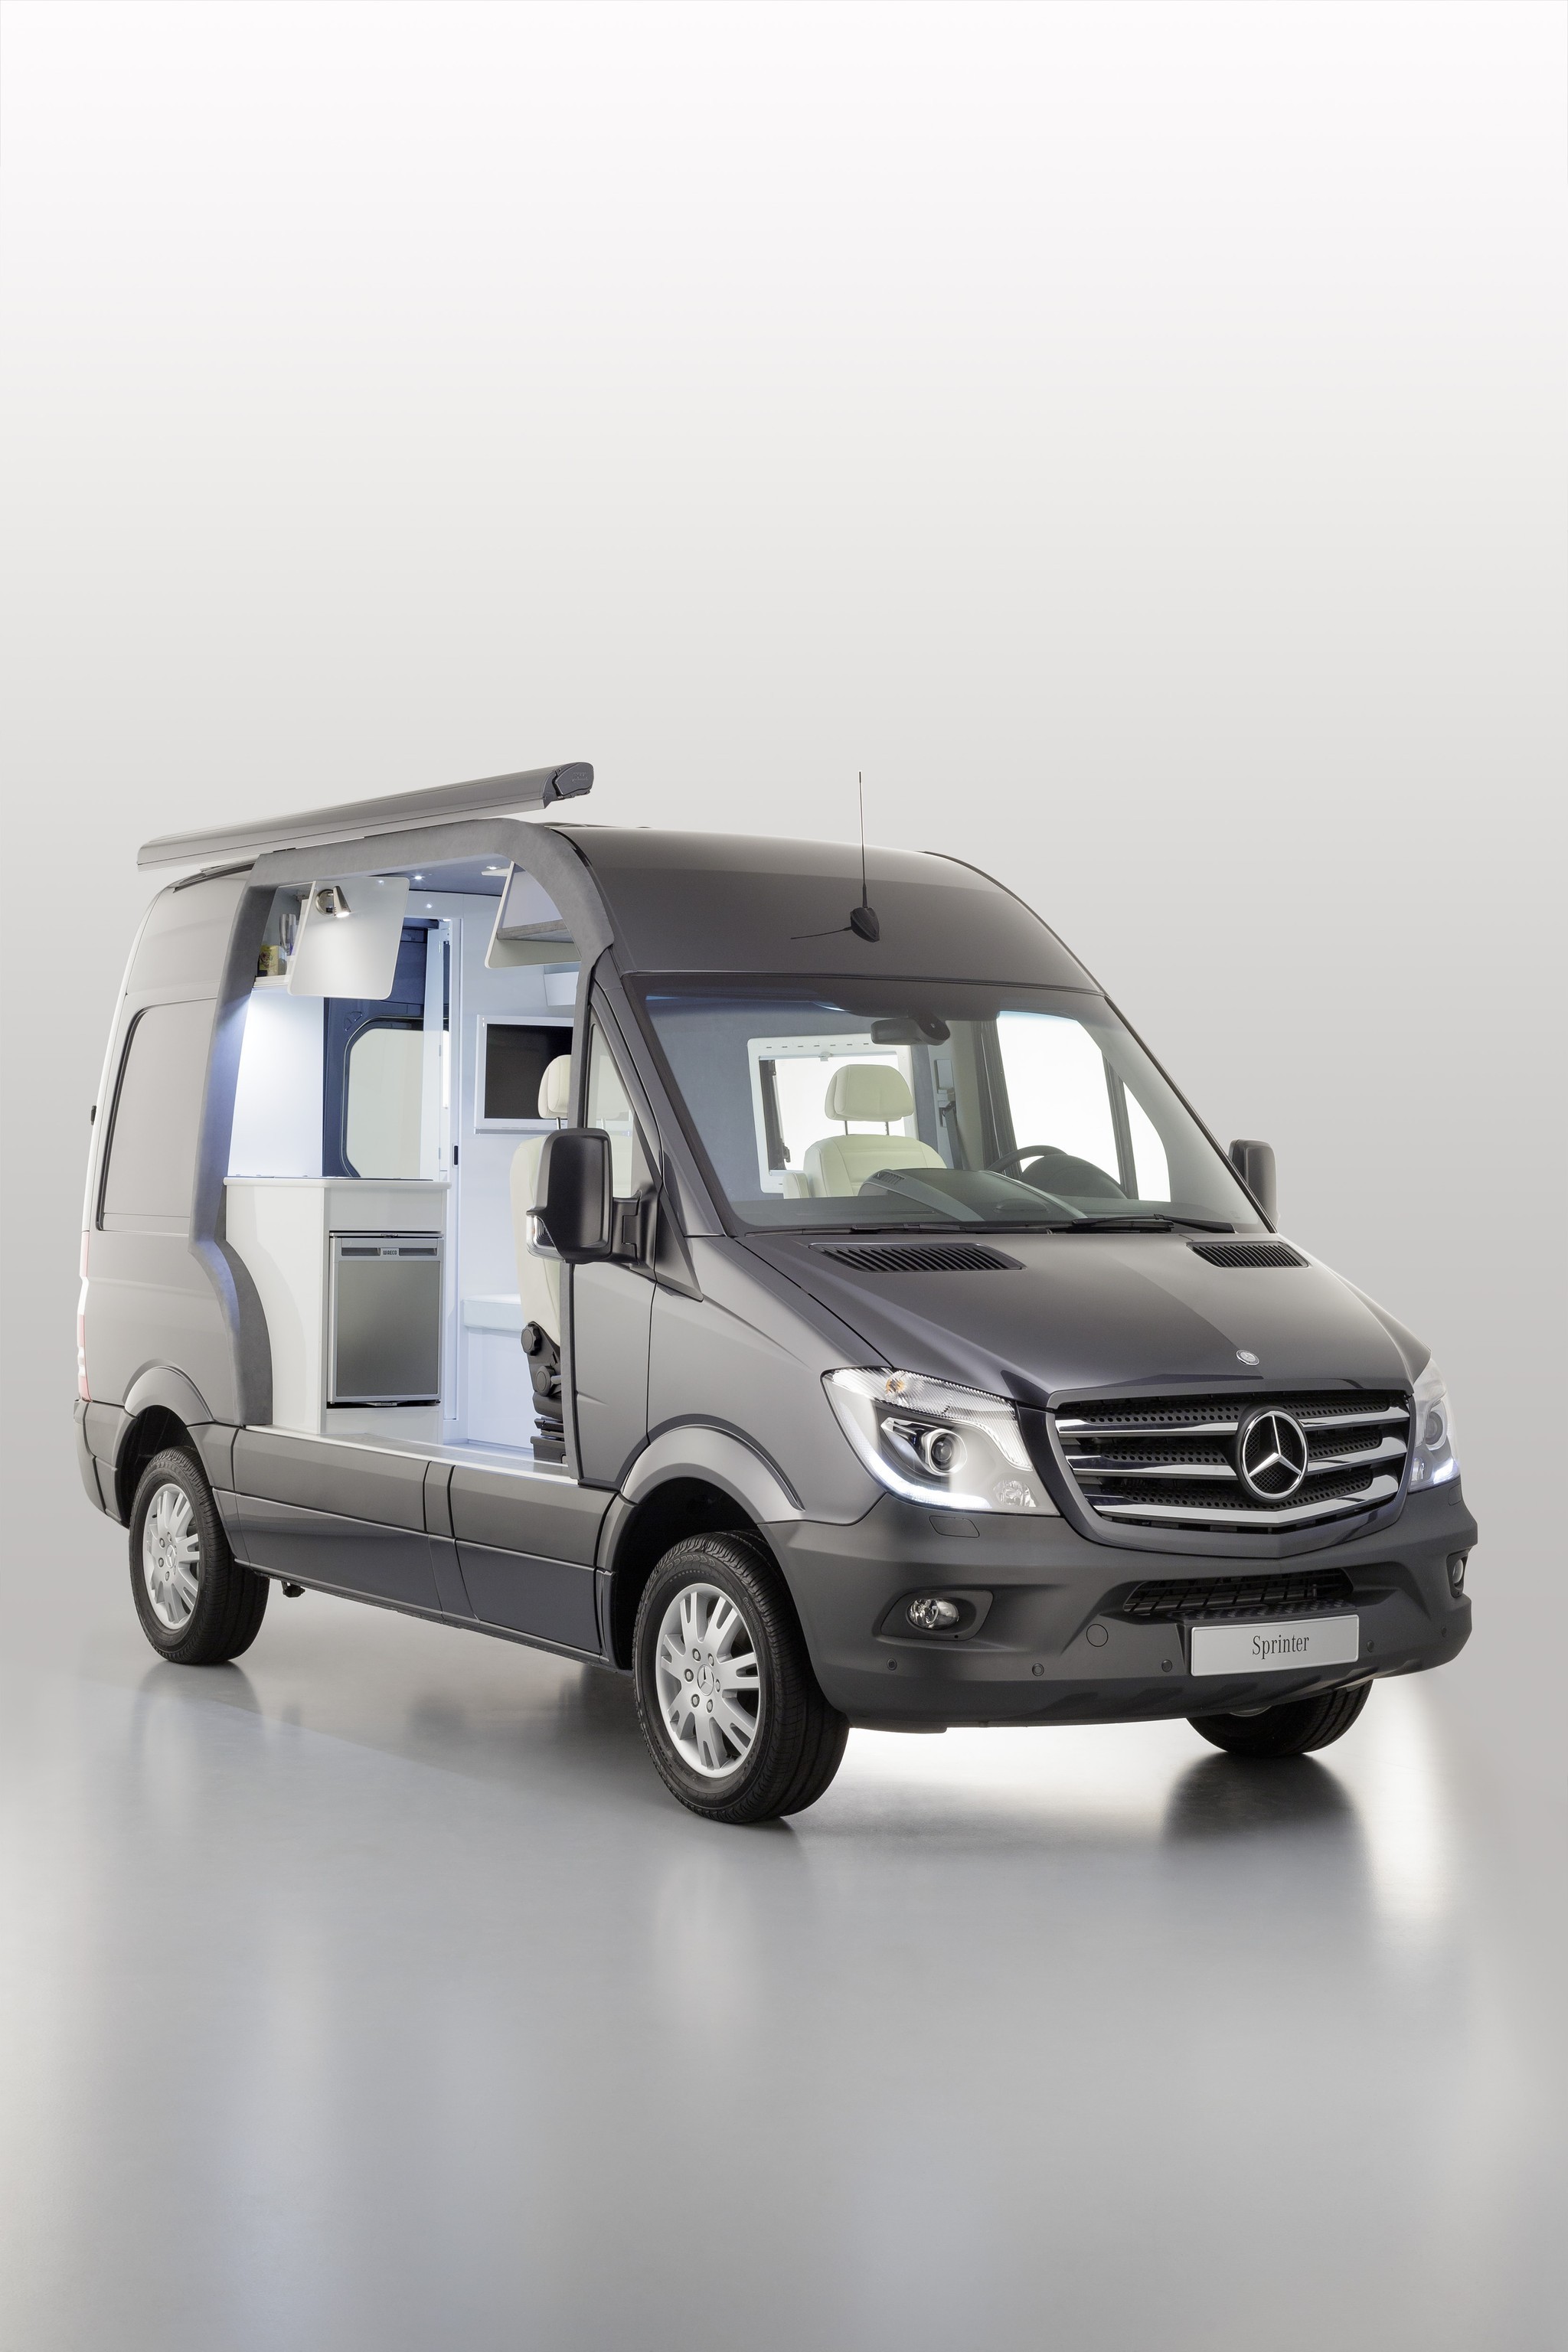 Sprinter RV: Mercedes Brings Its Own Sprinter Camper Van to 2013